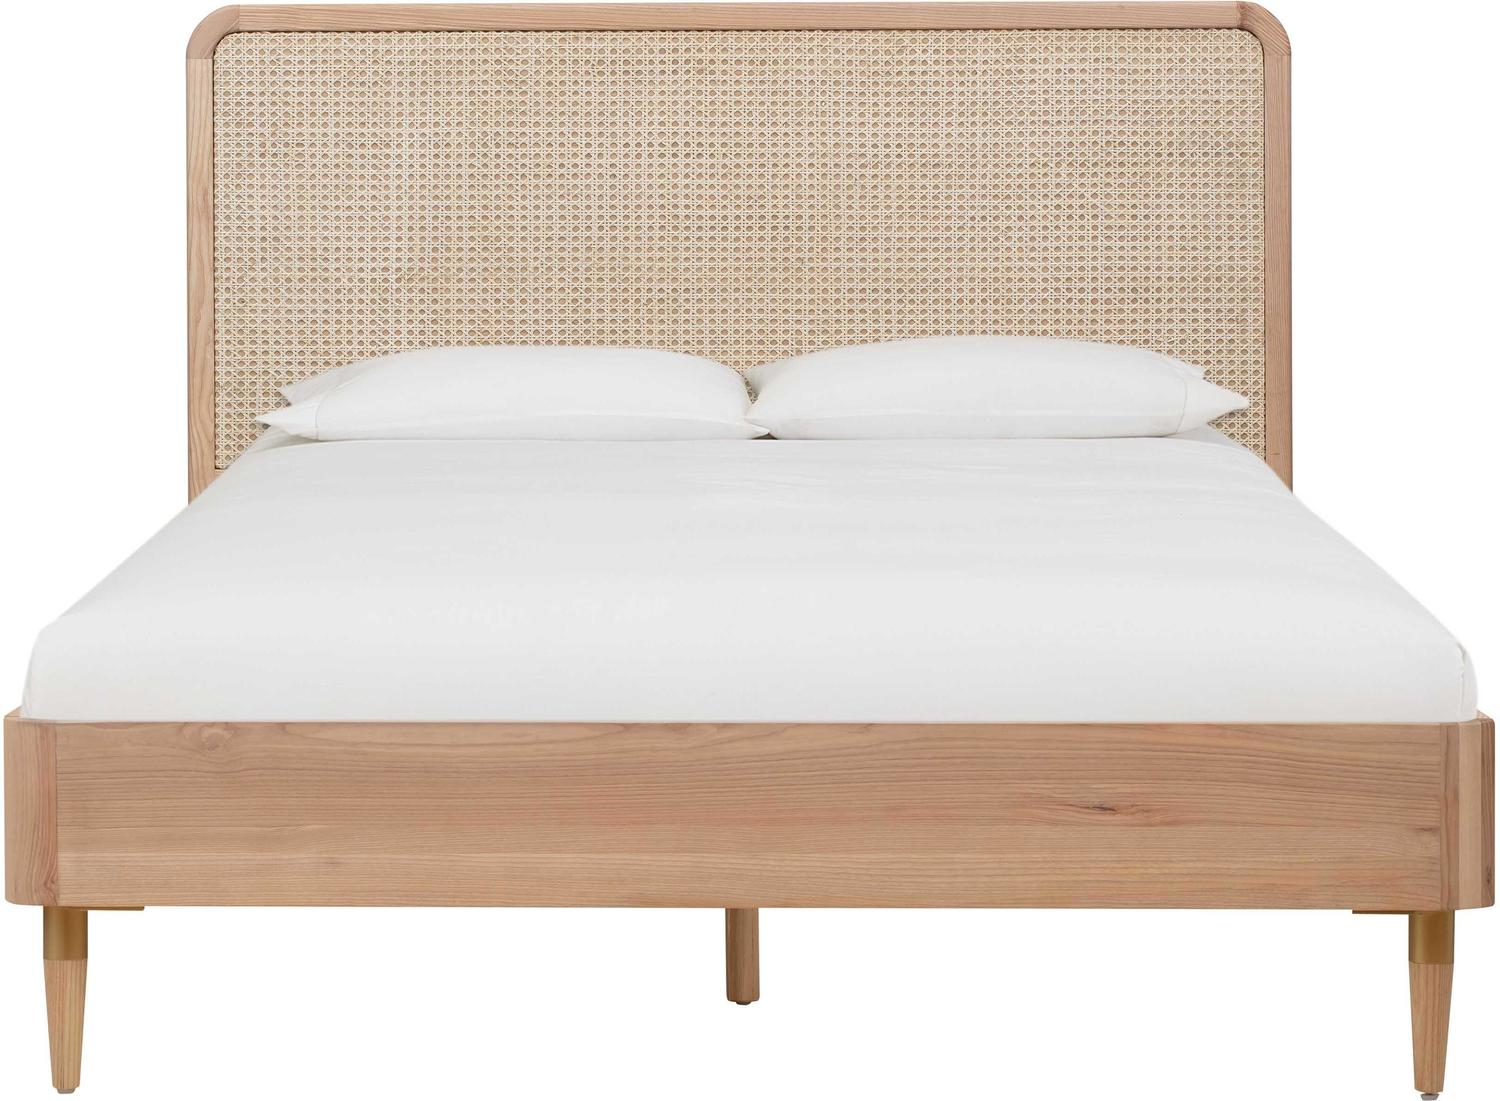 twin xl platform bed frame with headboard Tov Furniture Beds Natural Ash